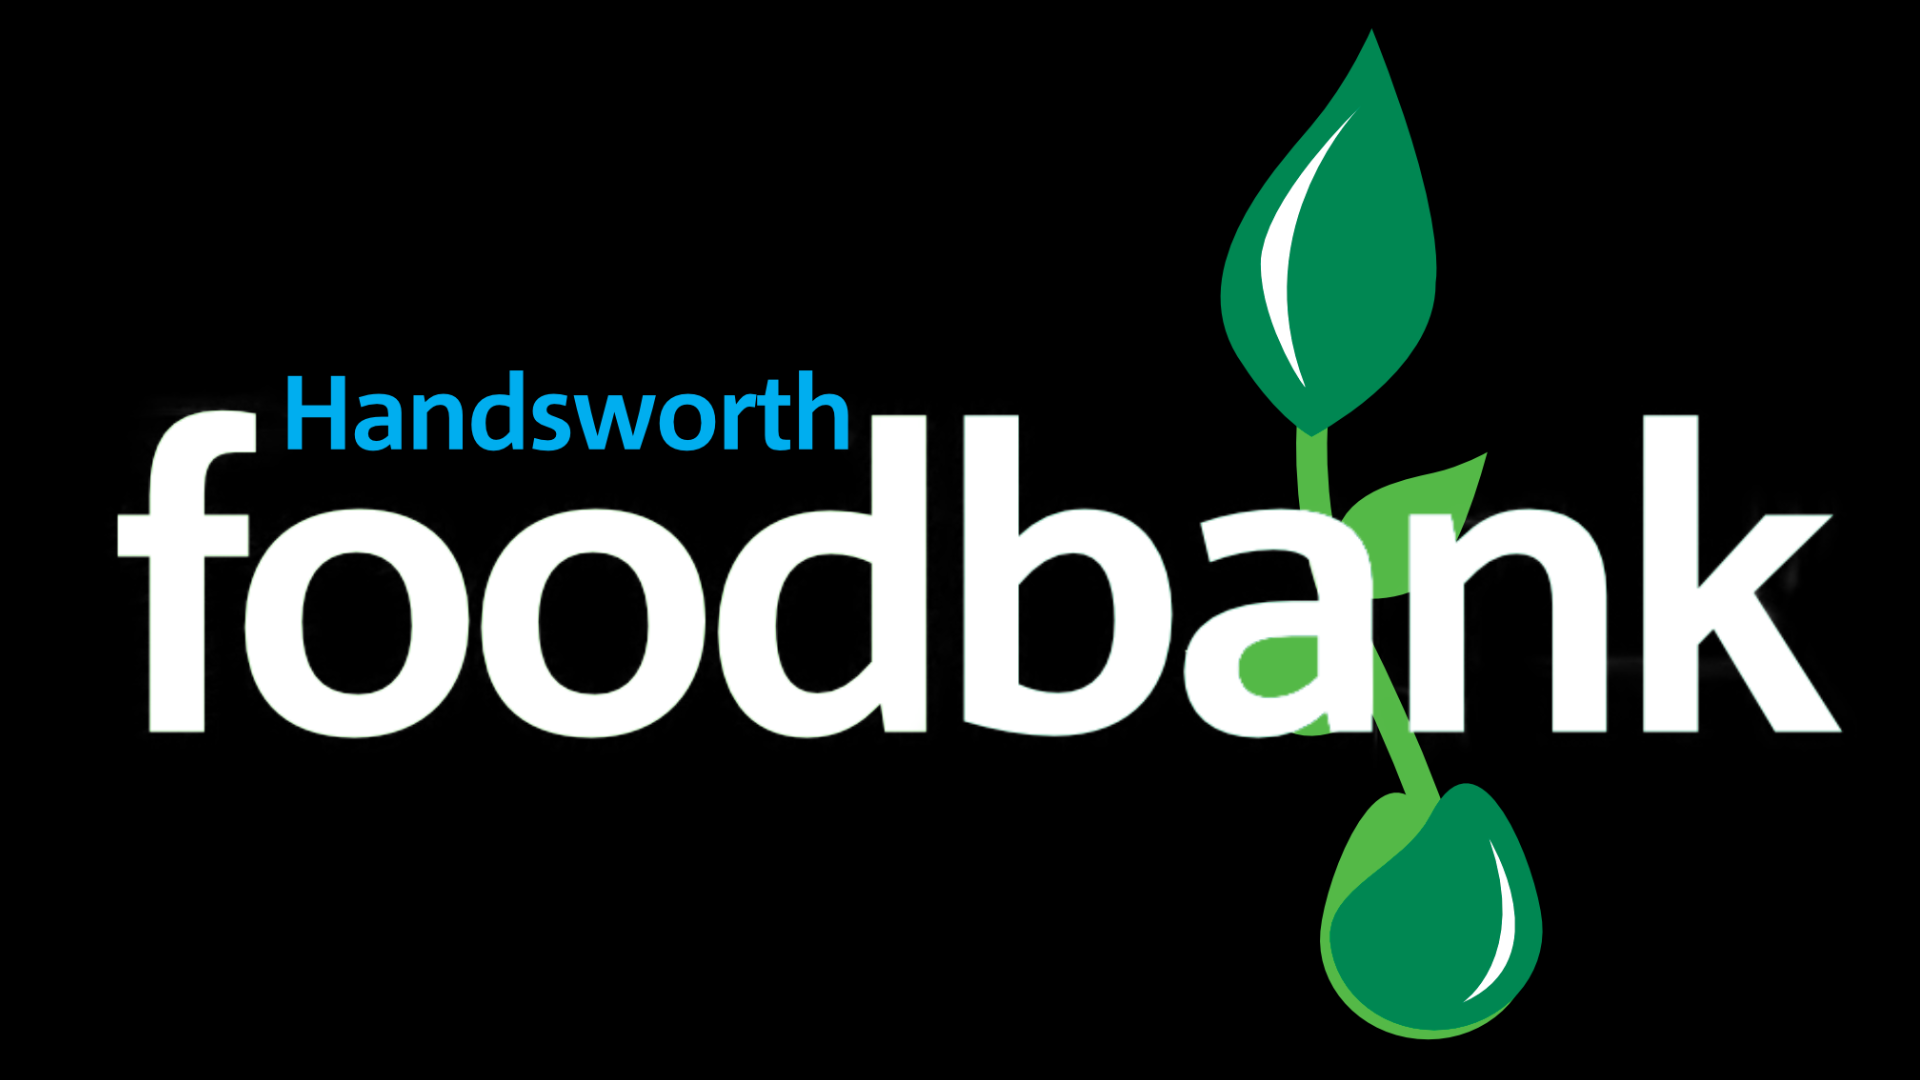 Handsworth foodbank logo